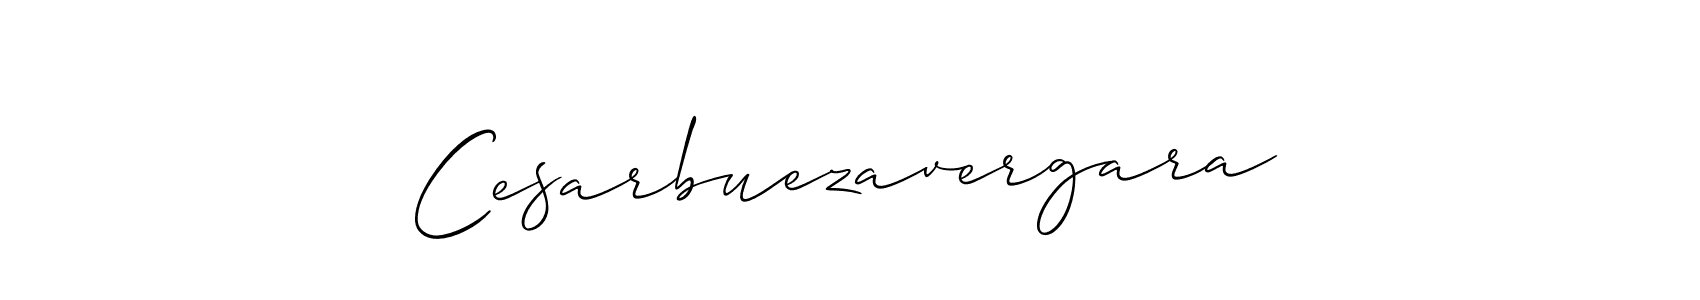 How to make Cesarbuezavergara signature? Allison_Script is a professional autograph style. Create handwritten signature for Cesarbuezavergara name. Cesarbuezavergara signature style 2 images and pictures png